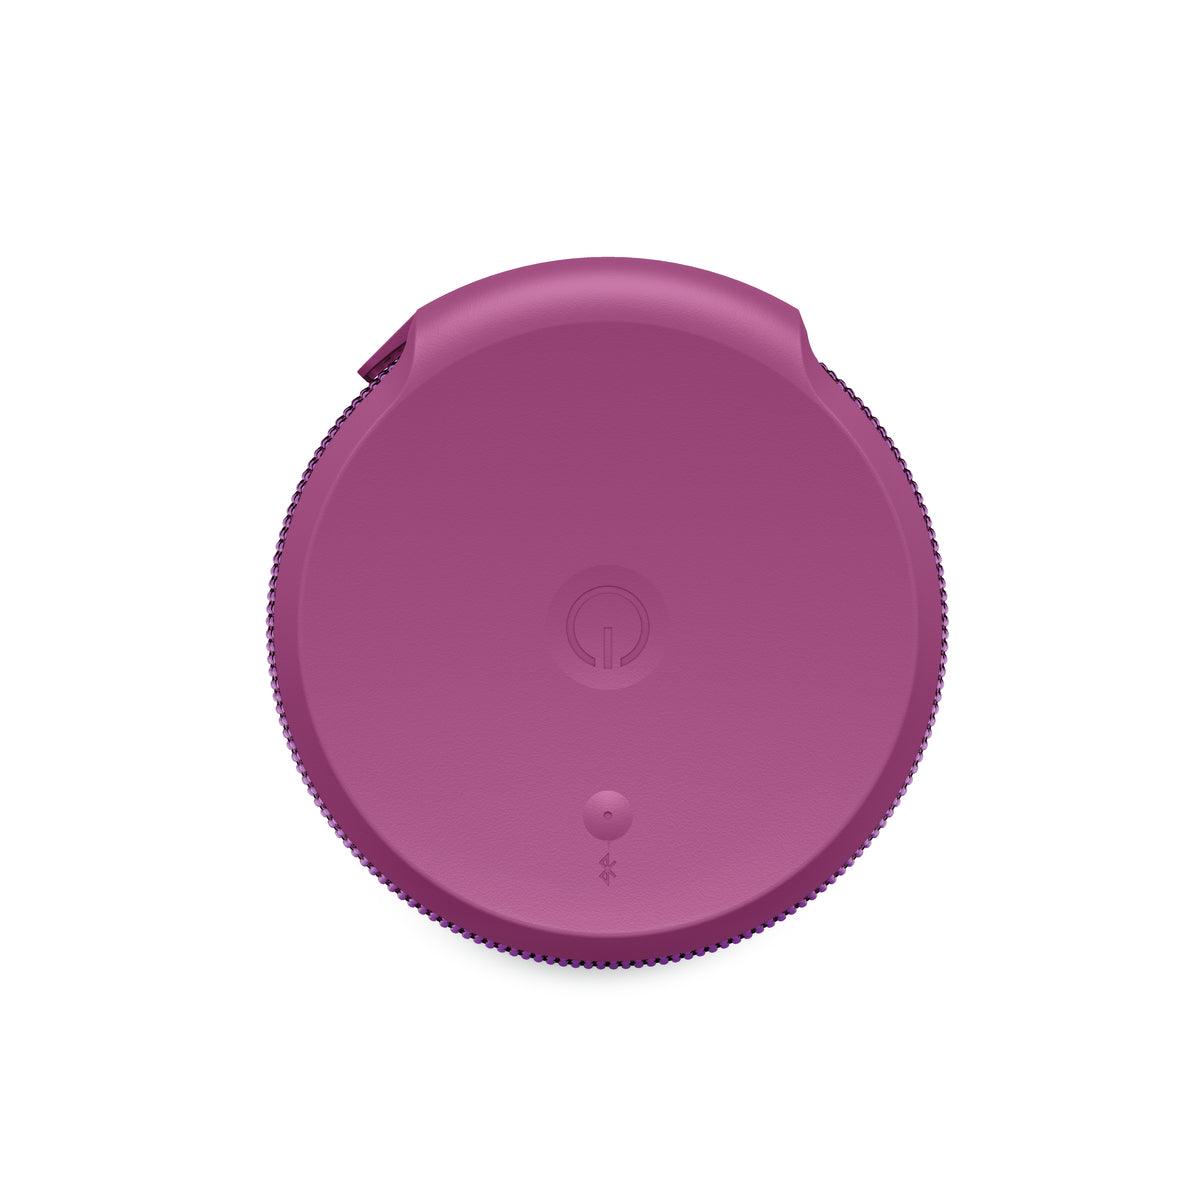 Ultimate Ears MEGABOOM - speaker - for portable use - wireless